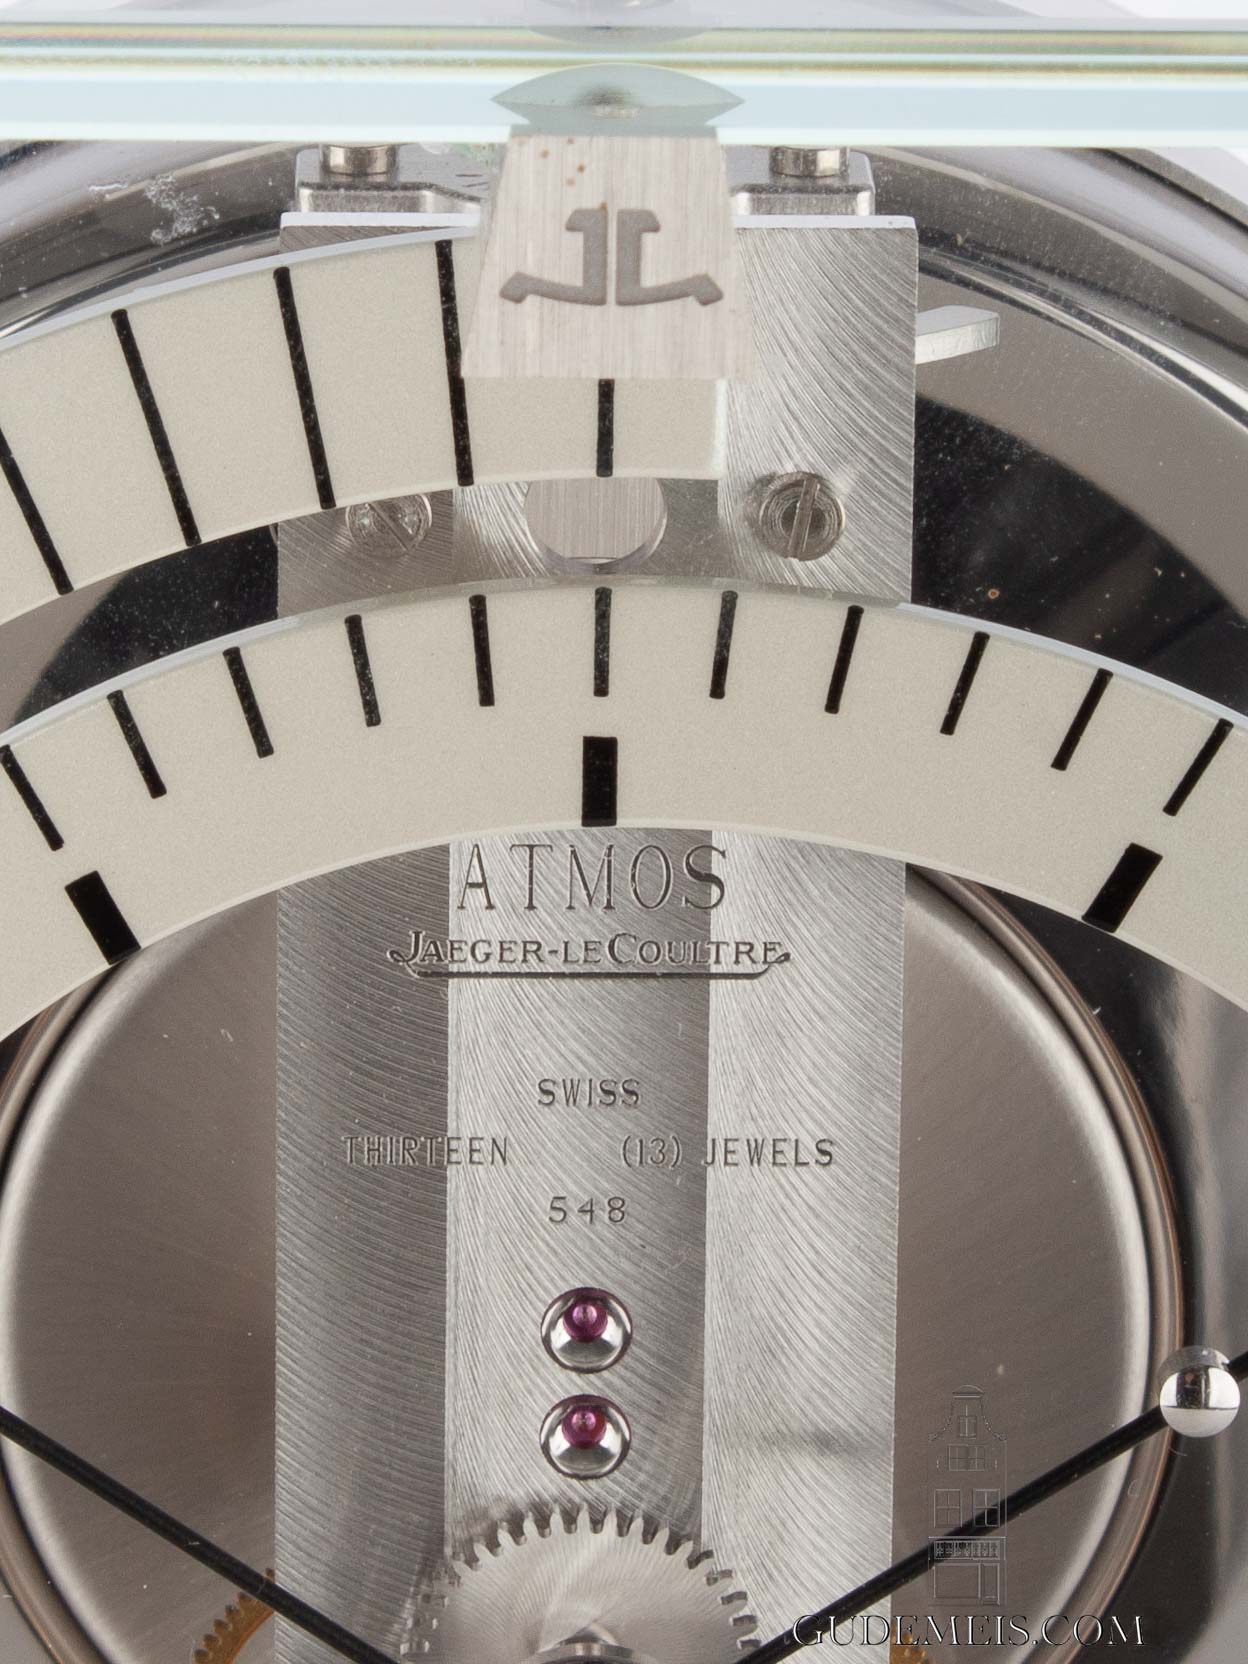 Swiss-rhodium-atmos-atlantis-moonphase-Jaeger-Lecoultre-glass-antique-clock-